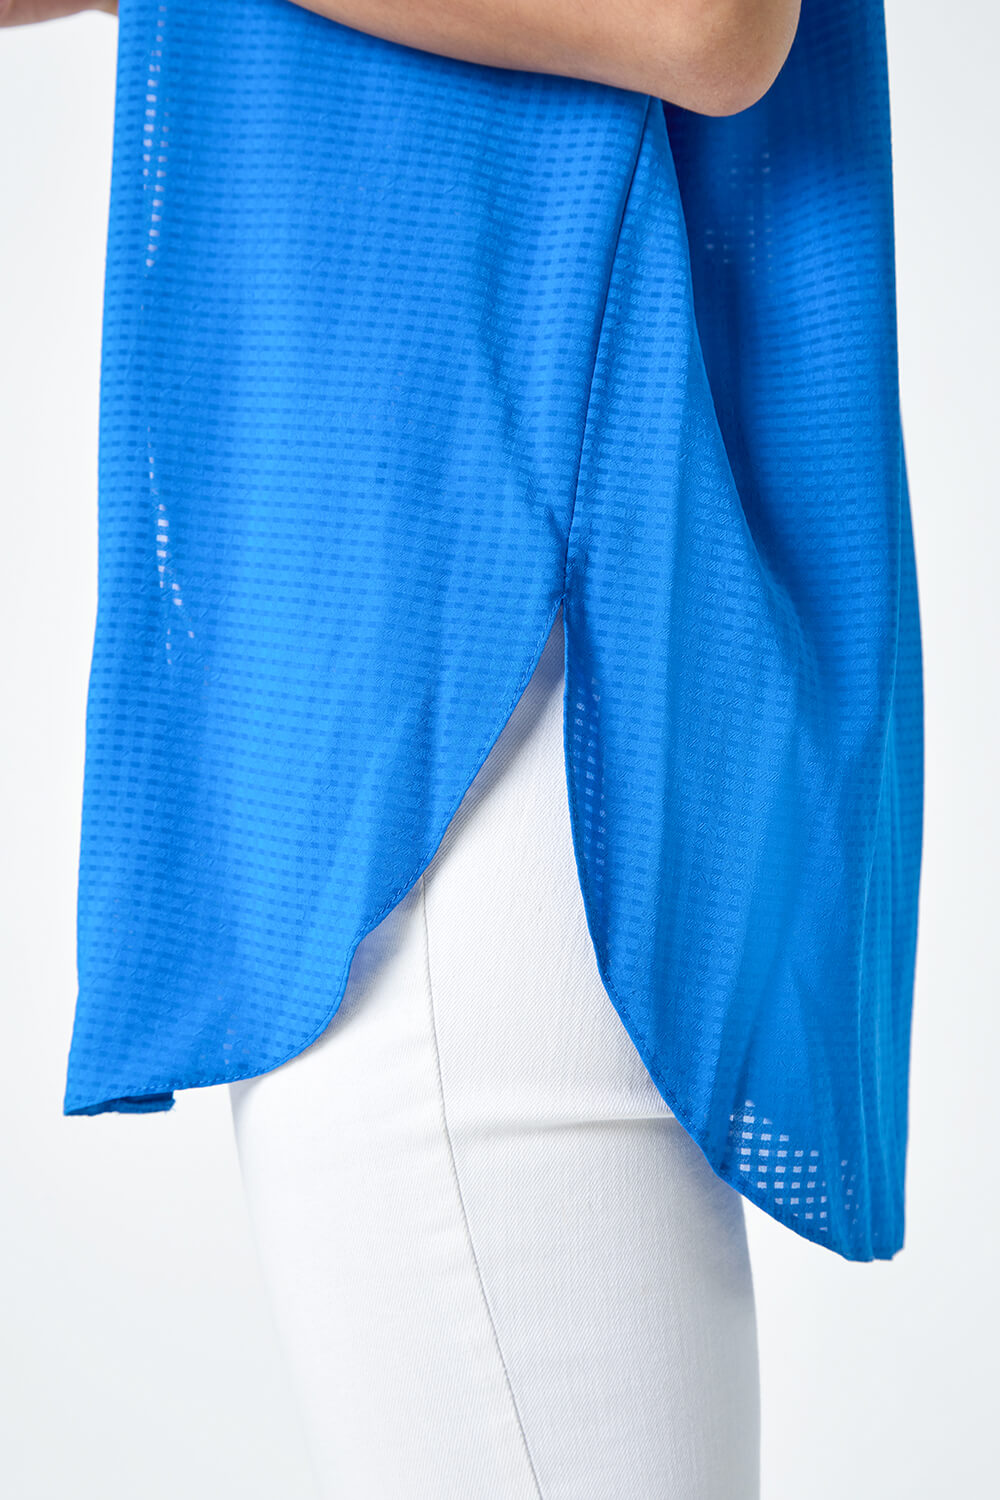 Royal Blue Textured Sleeveless Blouse, Image 5 of 5